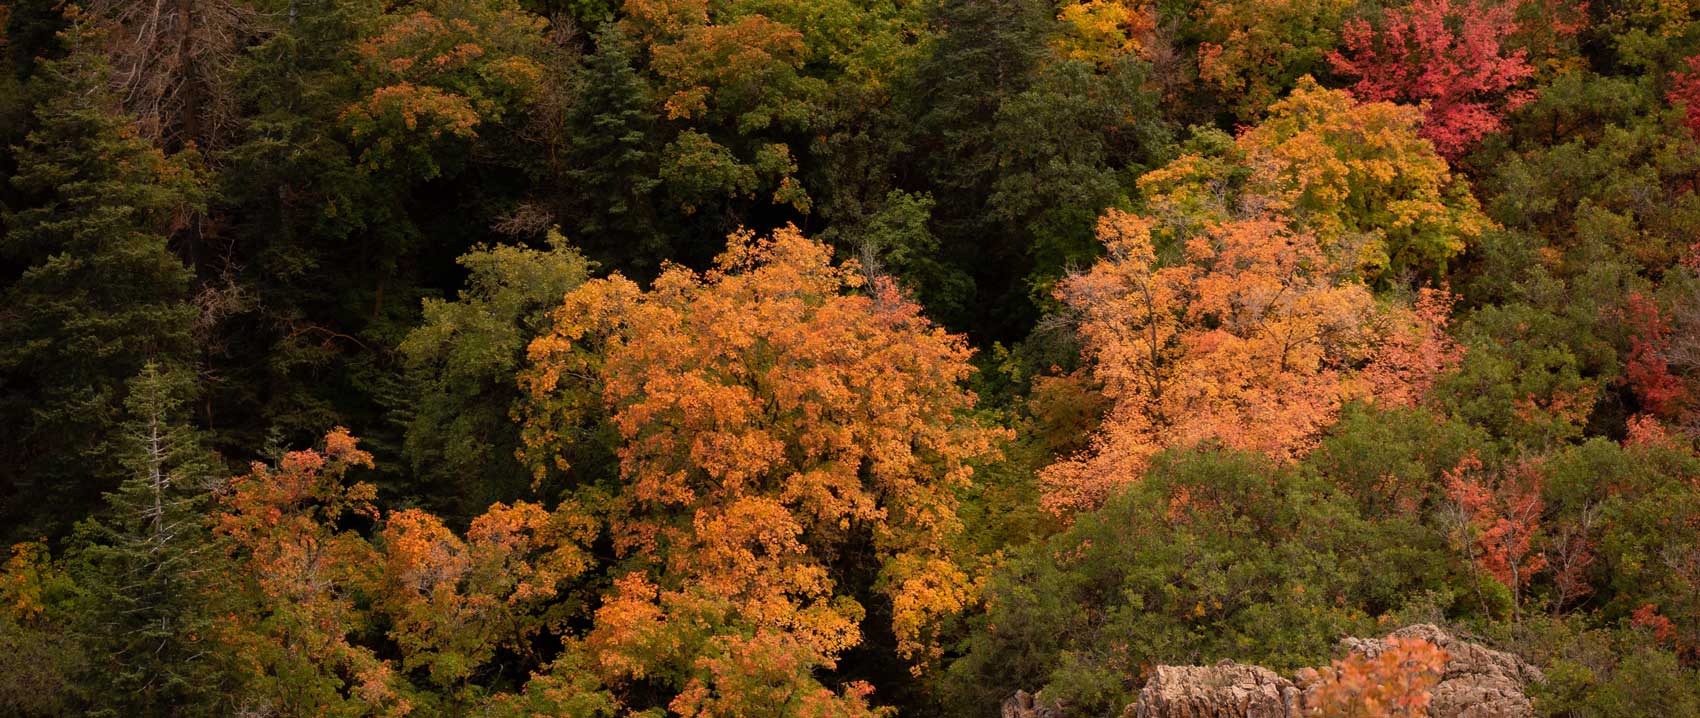 Utah in autumn Photo by Alex Moliski on Unsplash